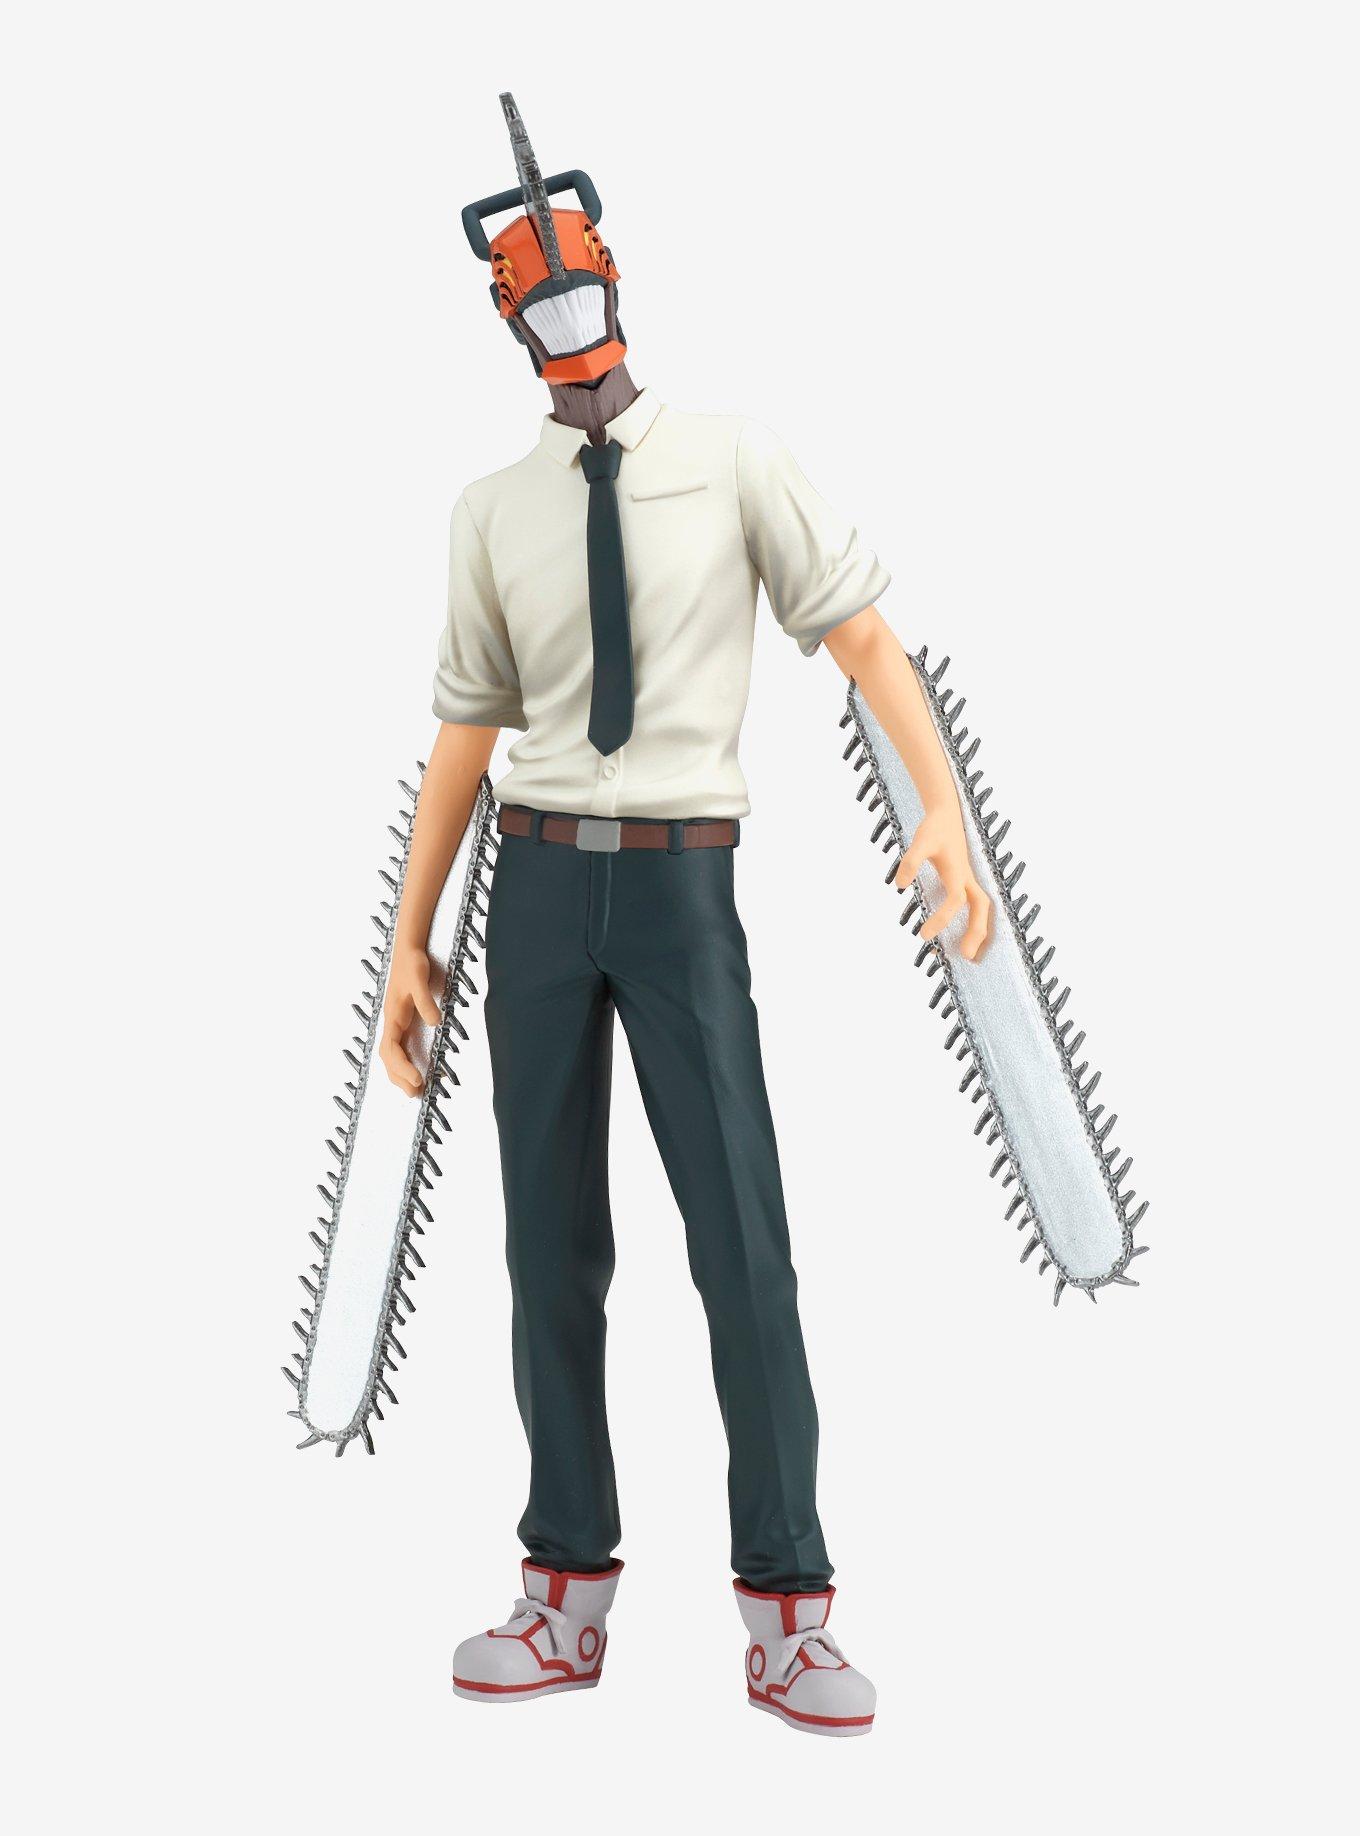 Denji Chainsaw Man Cosplay, Anime Cartoon Chainsaw Man Doll Plush Gift